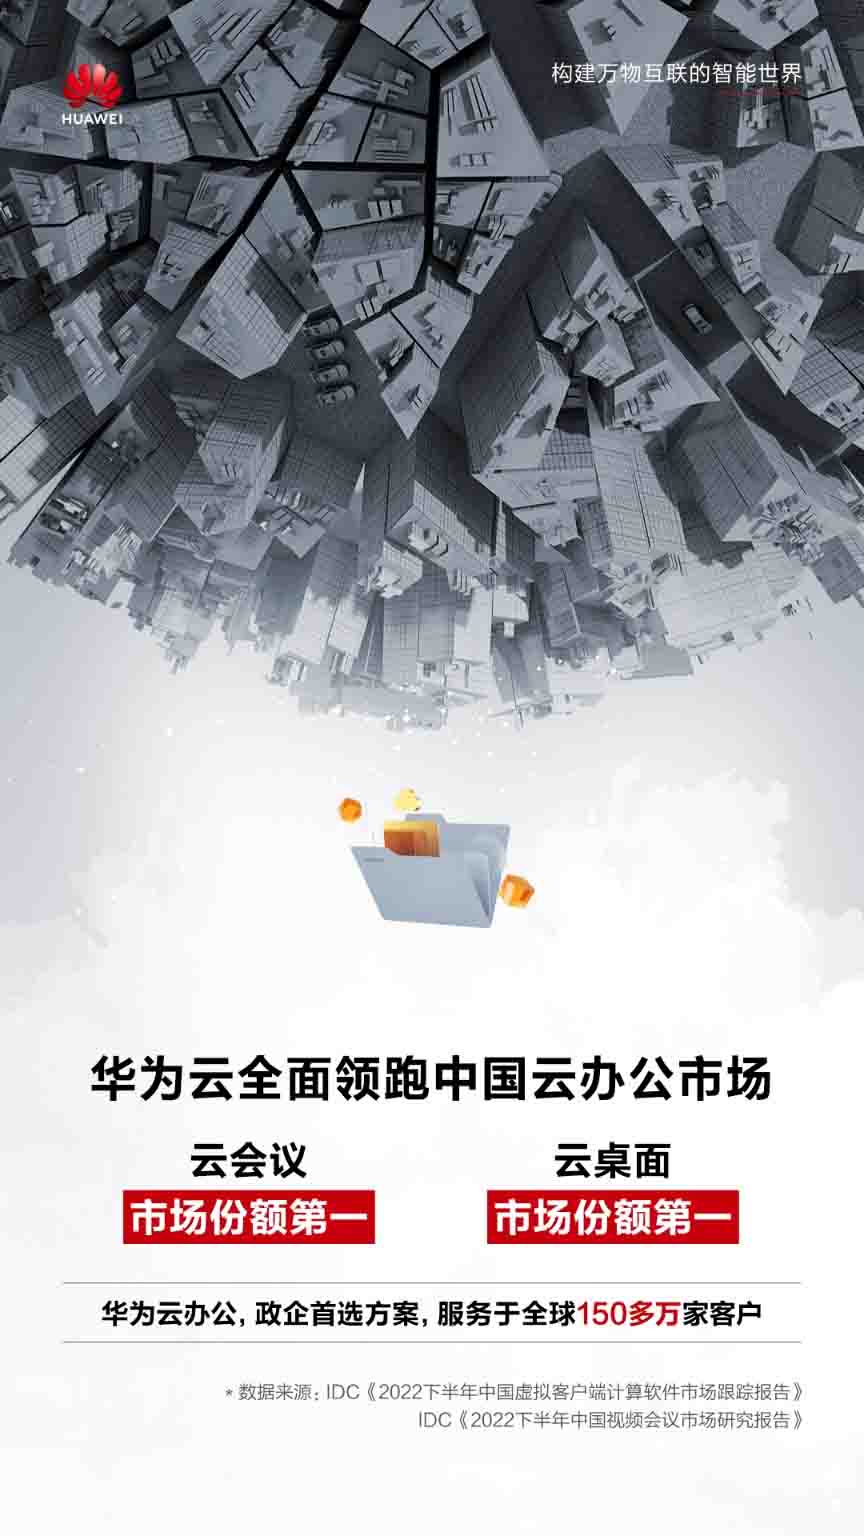 Huawei first cloud desktop